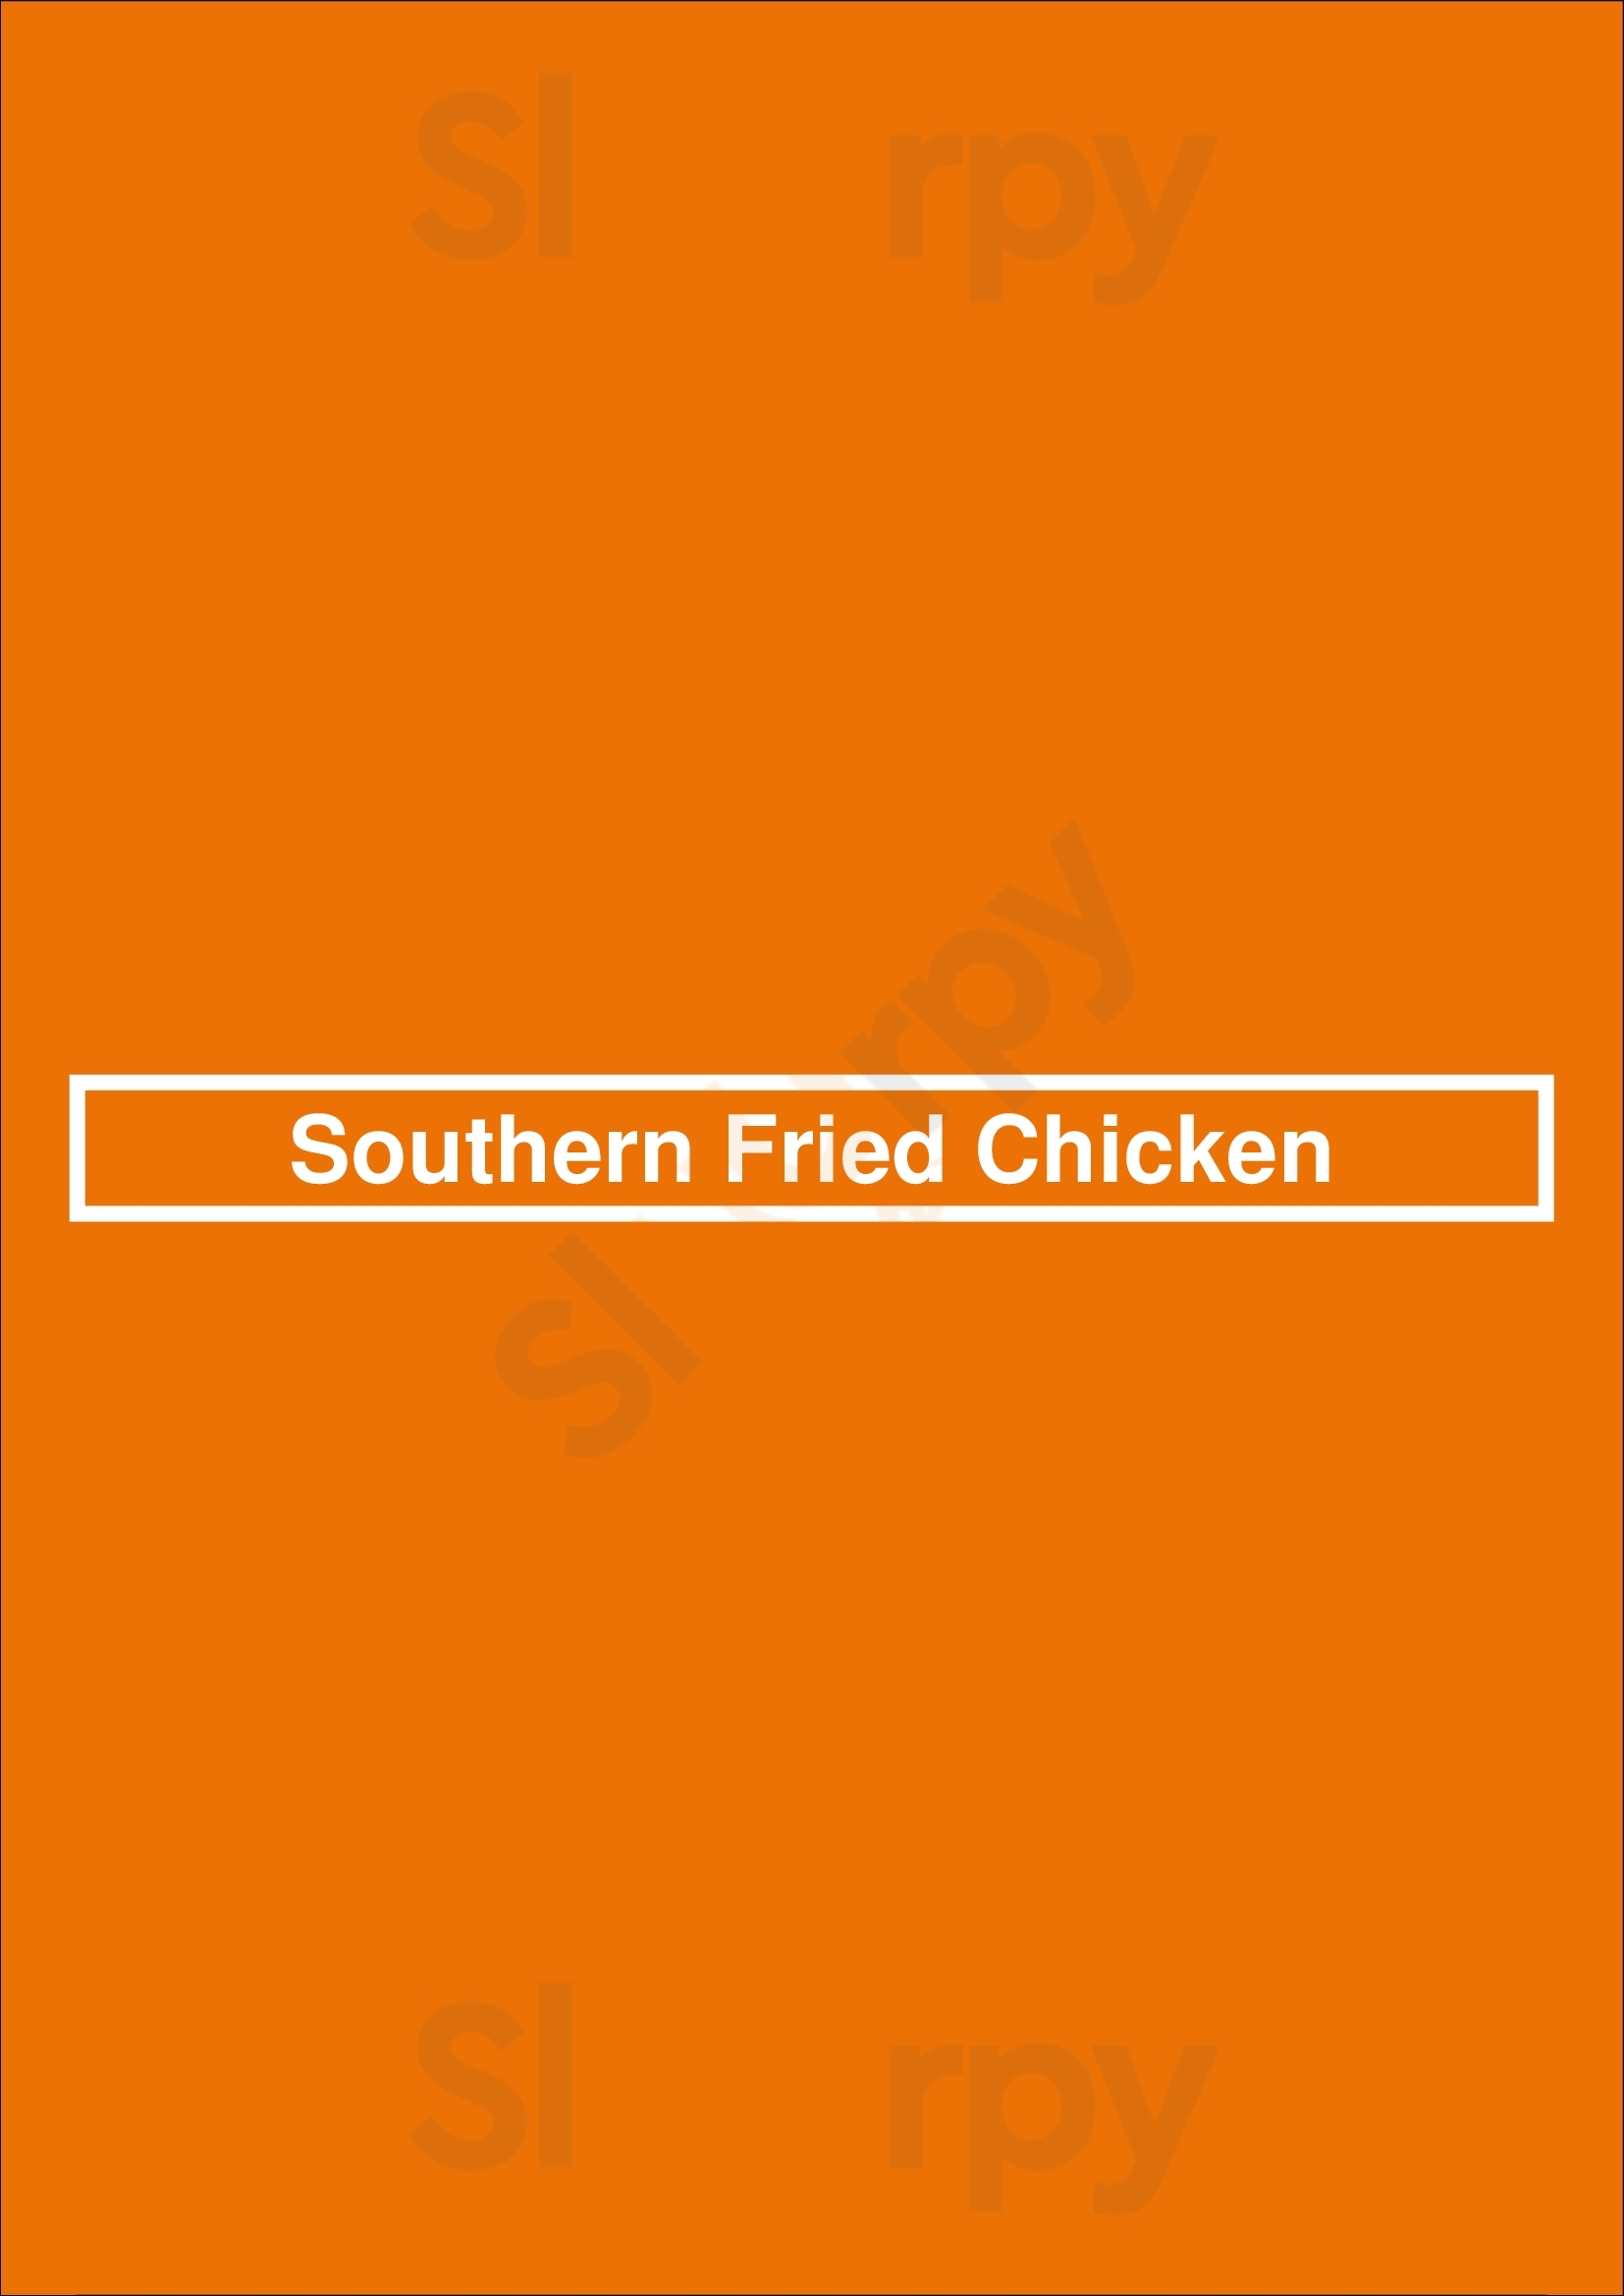 Southern Fried Chicken Aberdare Menu - 1